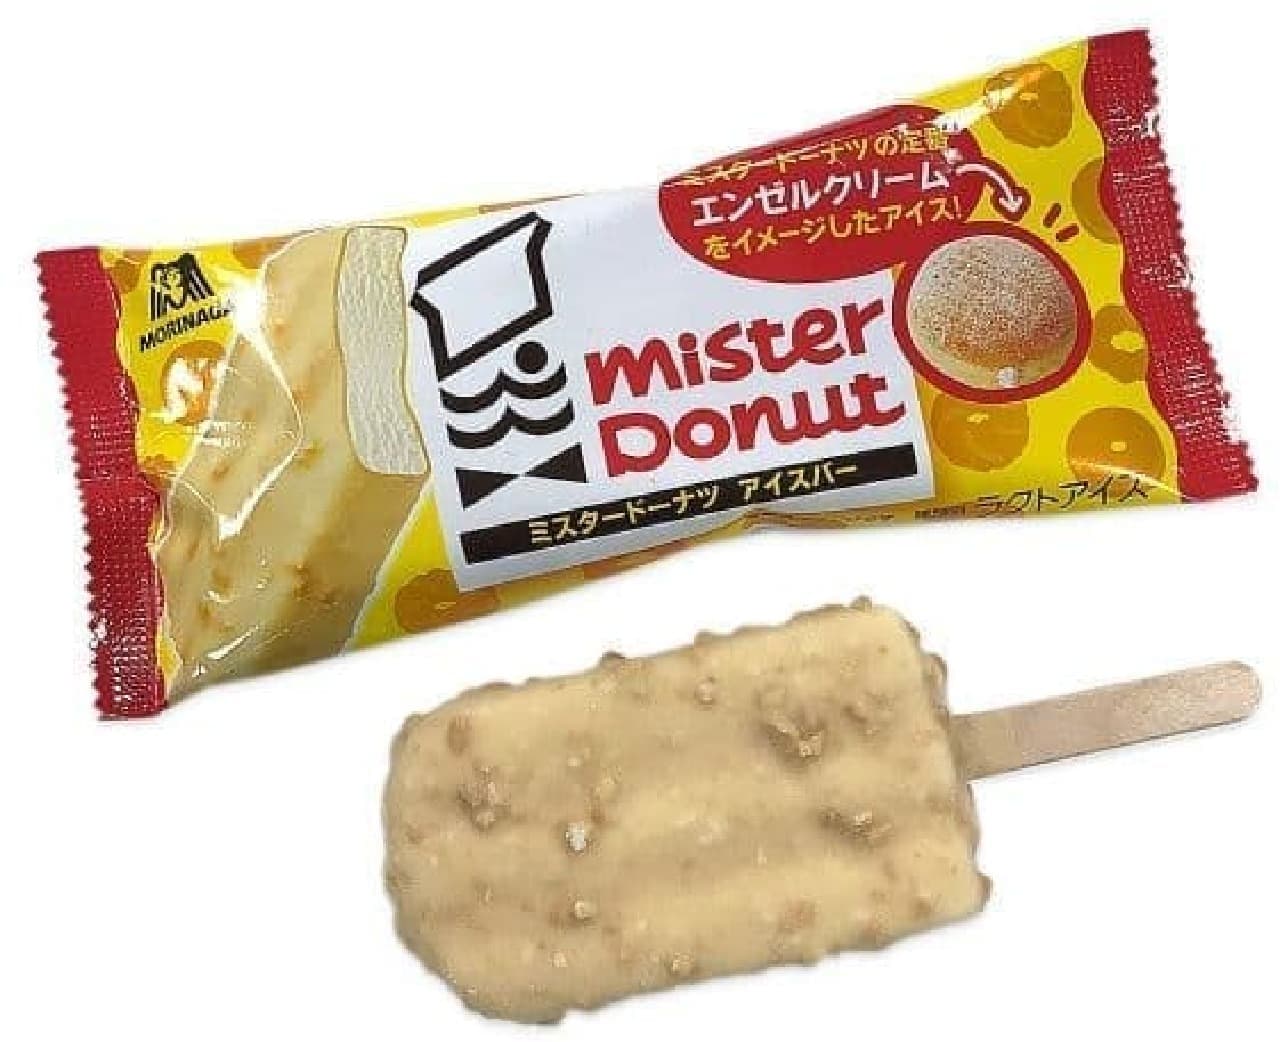 7-ELEVEN "Mister Donut Ice Cream Bar"